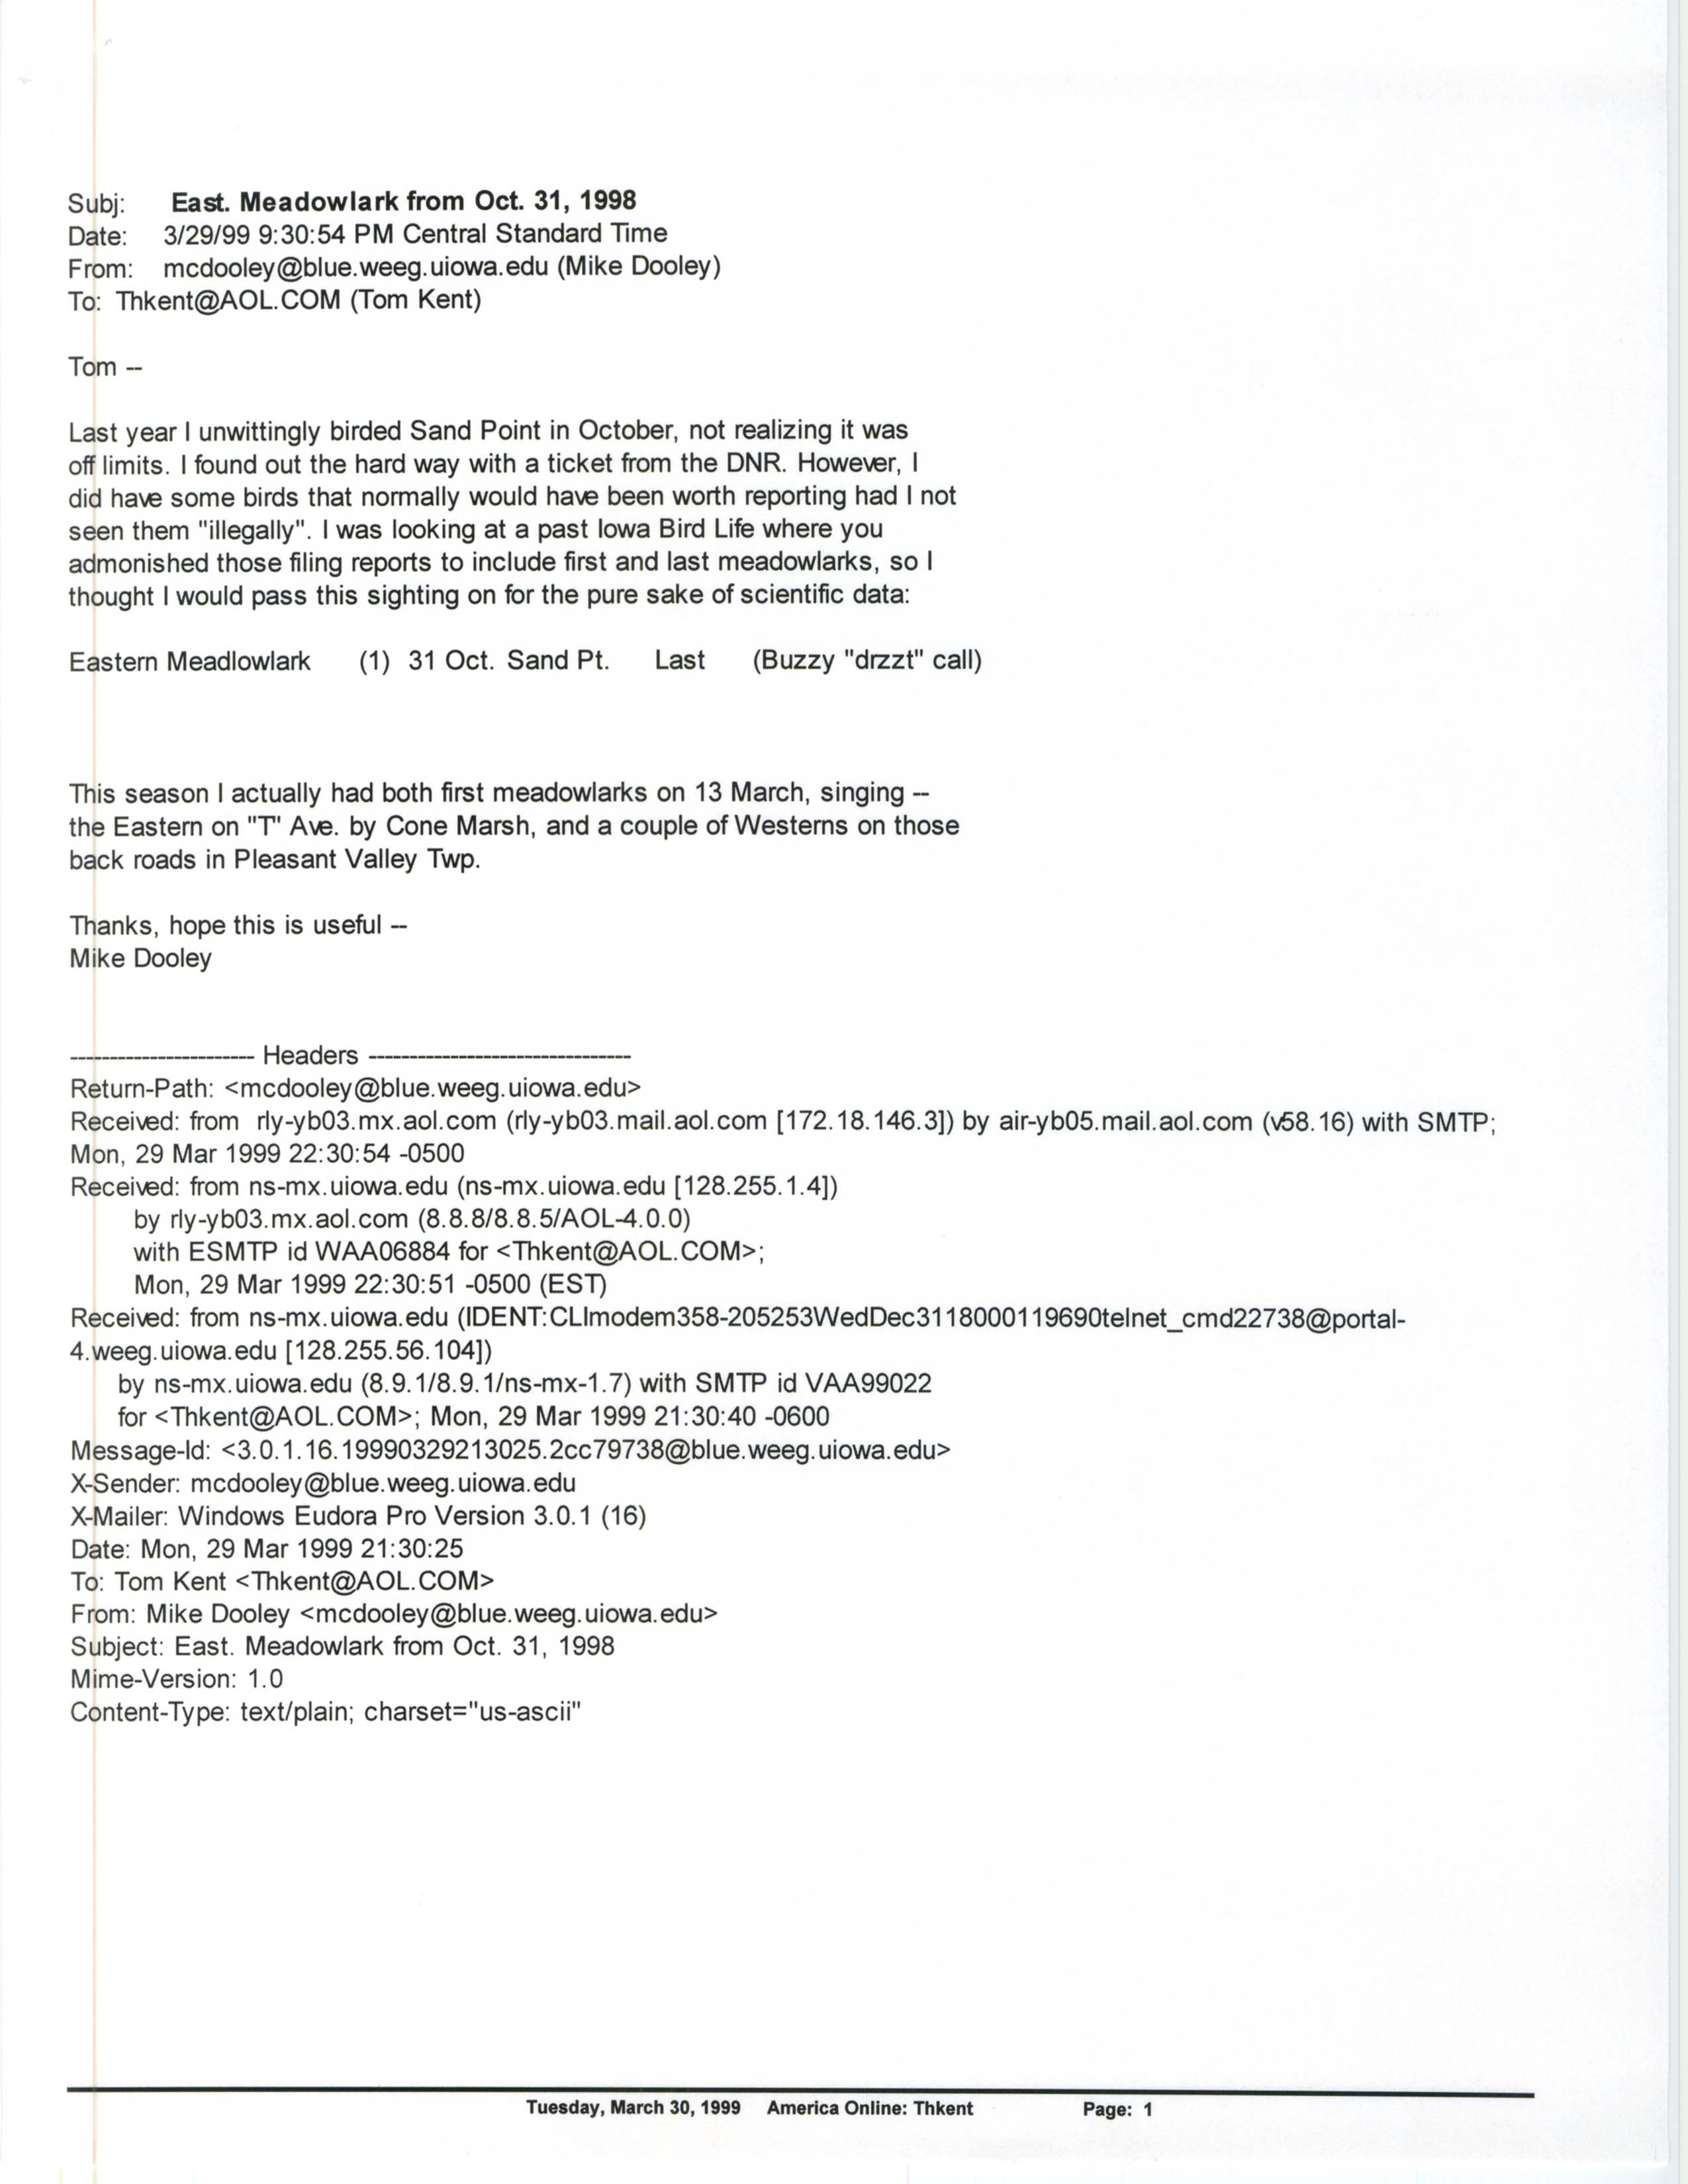 Mike Dooley email to Thomas Kent regarding Eastern Meadowlark, March 29, 1999